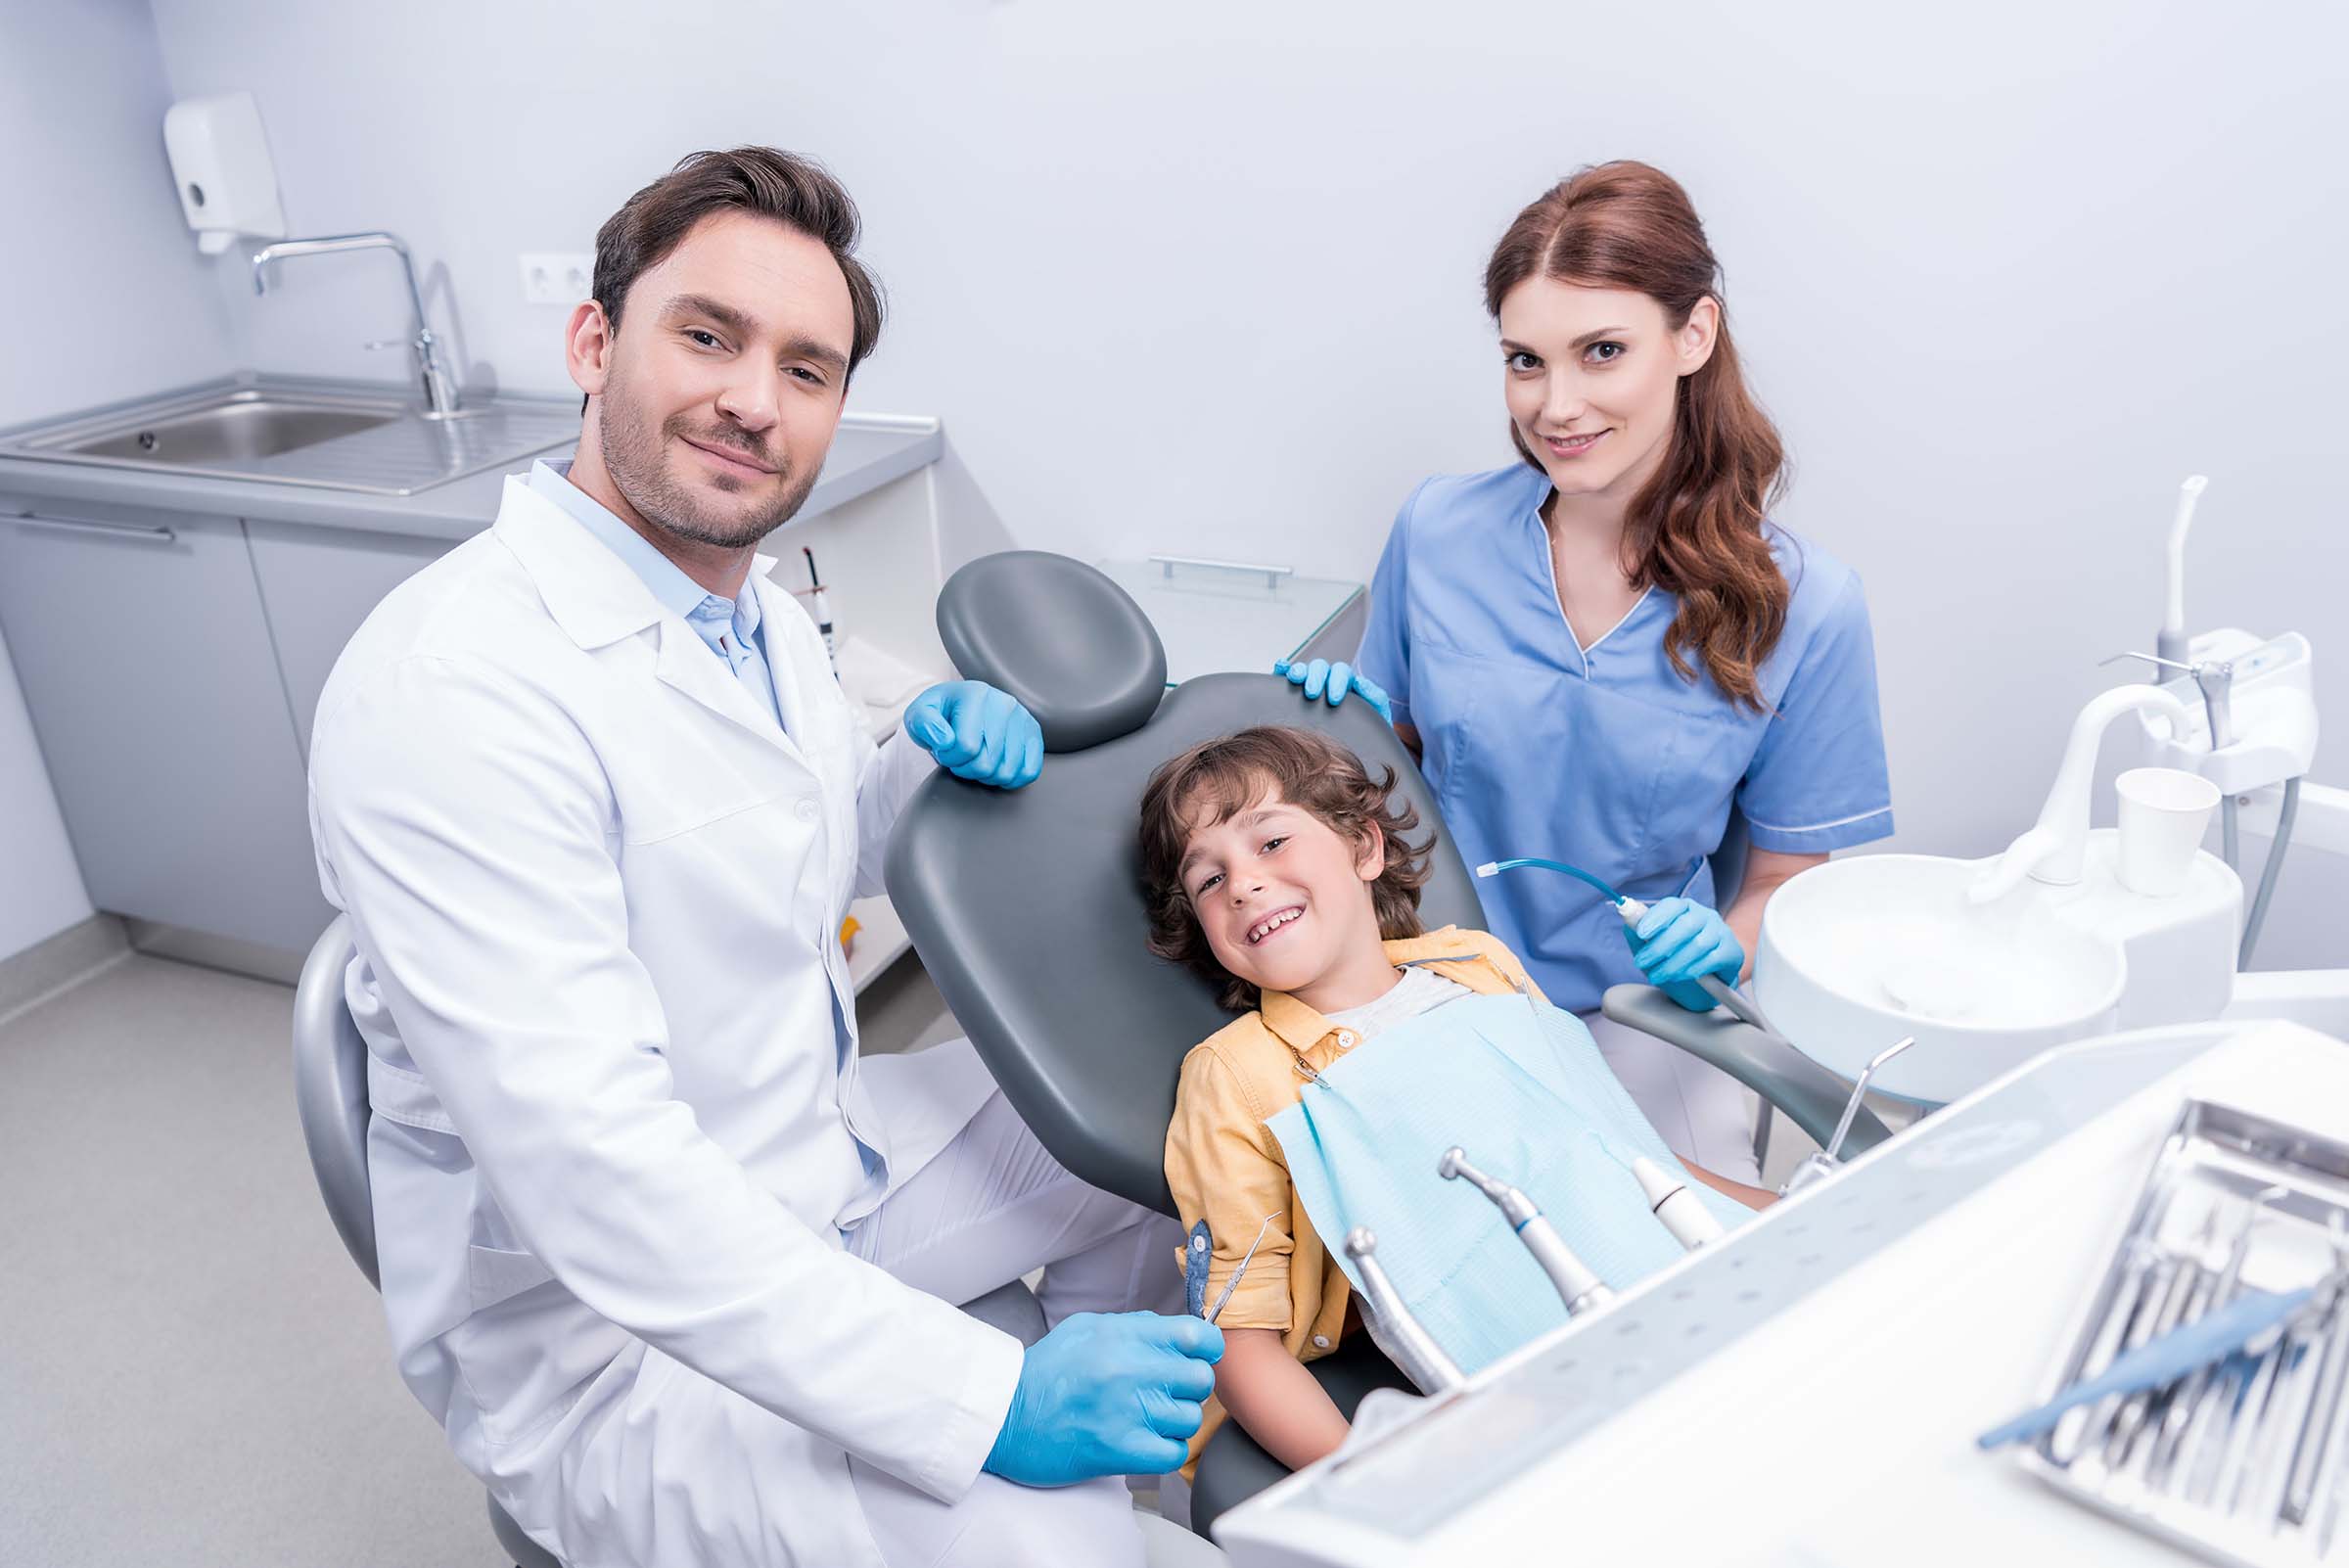 dentists-preparing-little-boy-for-examining-teeth-SGKWTC6.jpg